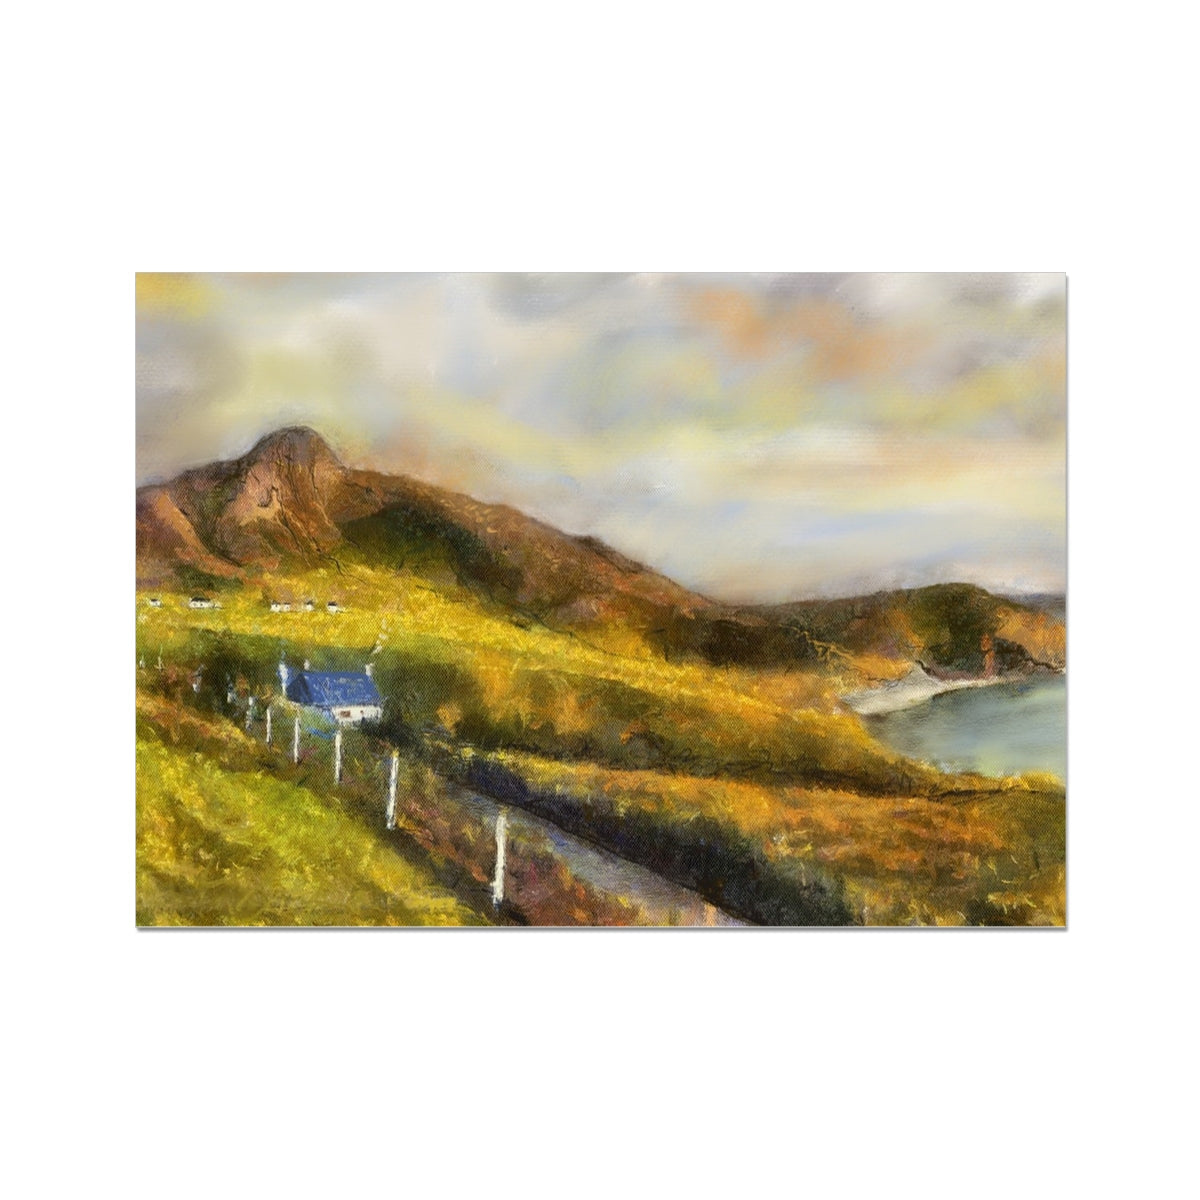 Coldbackie Painting | Fine Art Prints From Scotland-Unframed Prints-Scottish Highlands & Lowlands Art Gallery-A2 Landscape-Paintings, Prints, Homeware, Art Gifts From Scotland By Scottish Artist Kevin Hunter